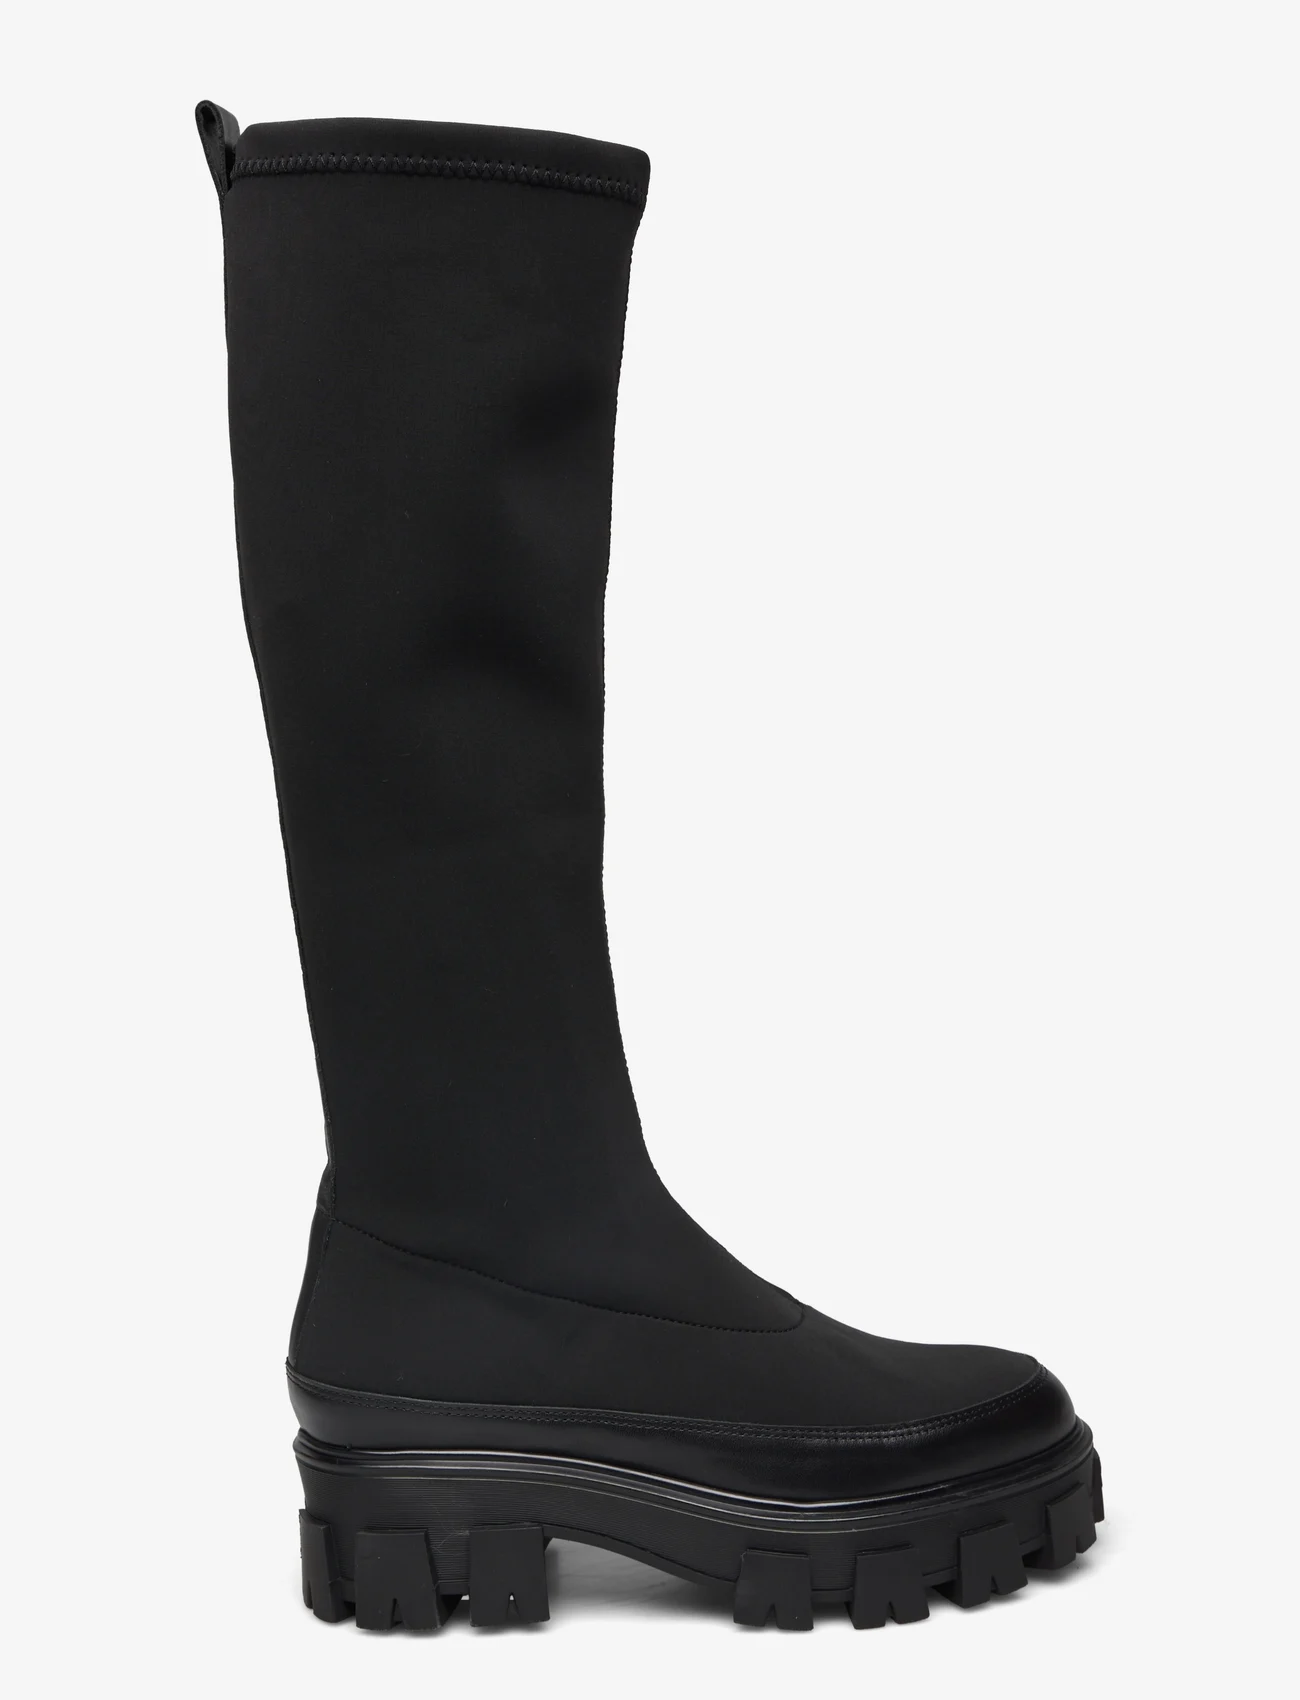 Billi Bi - Long Boots - knee high boots - black stretch - 1